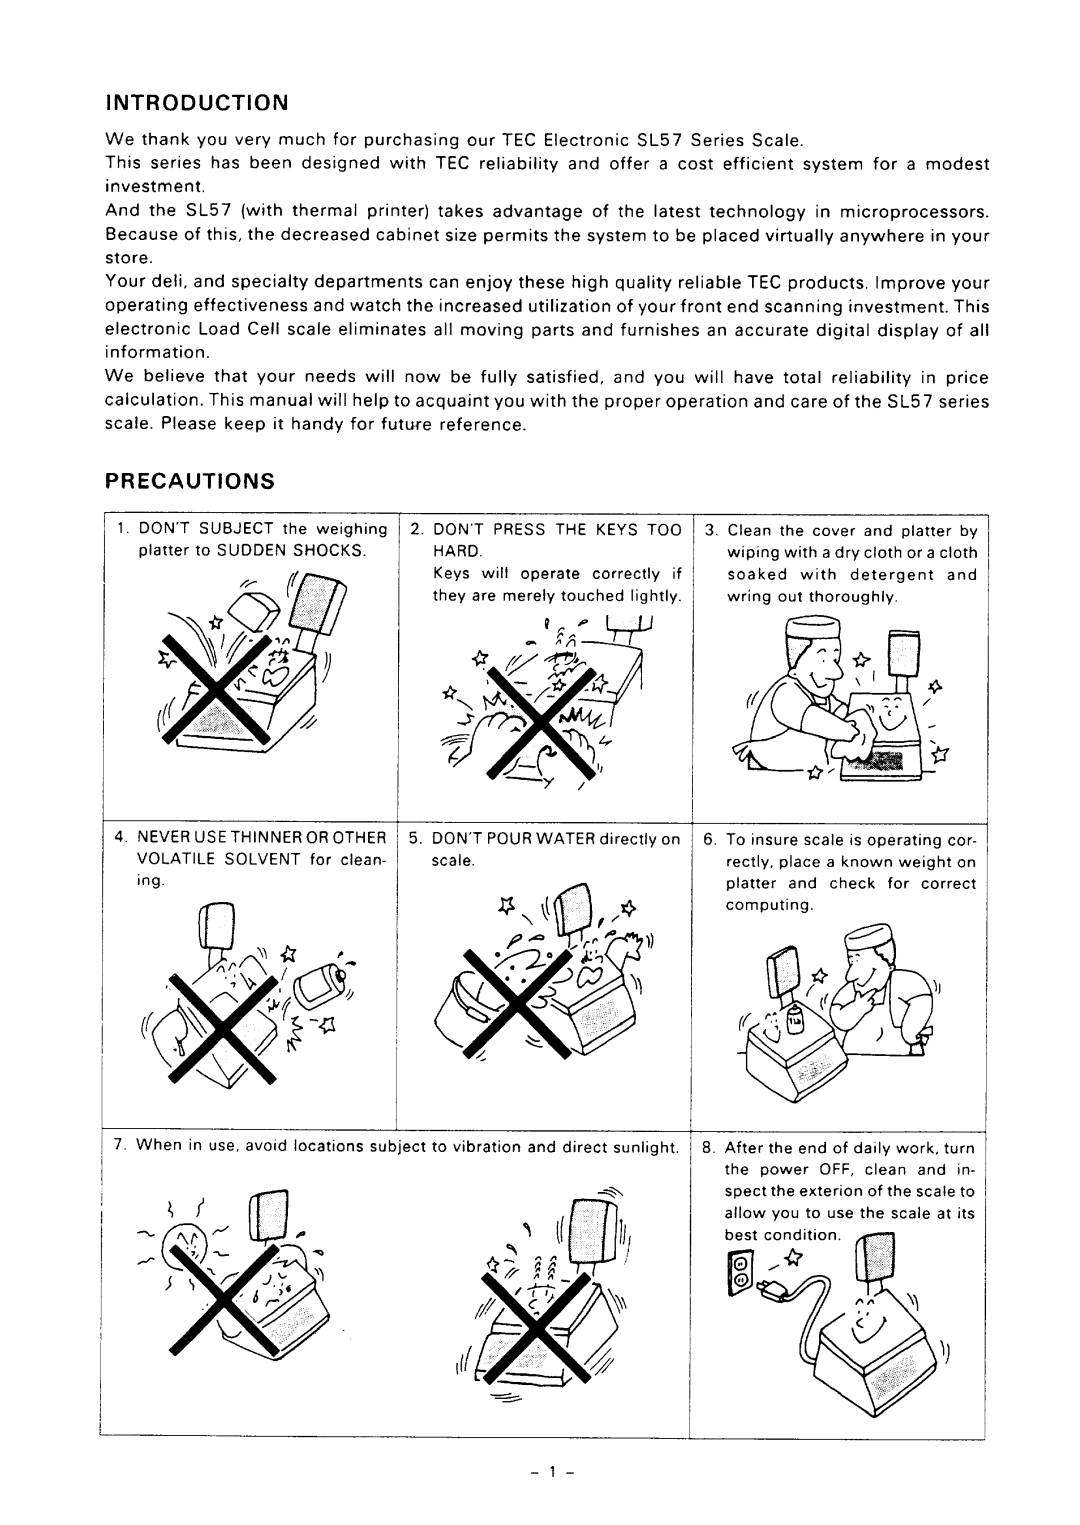 Toshiba SL57 SERIES owner manual Introduction, Precautions 